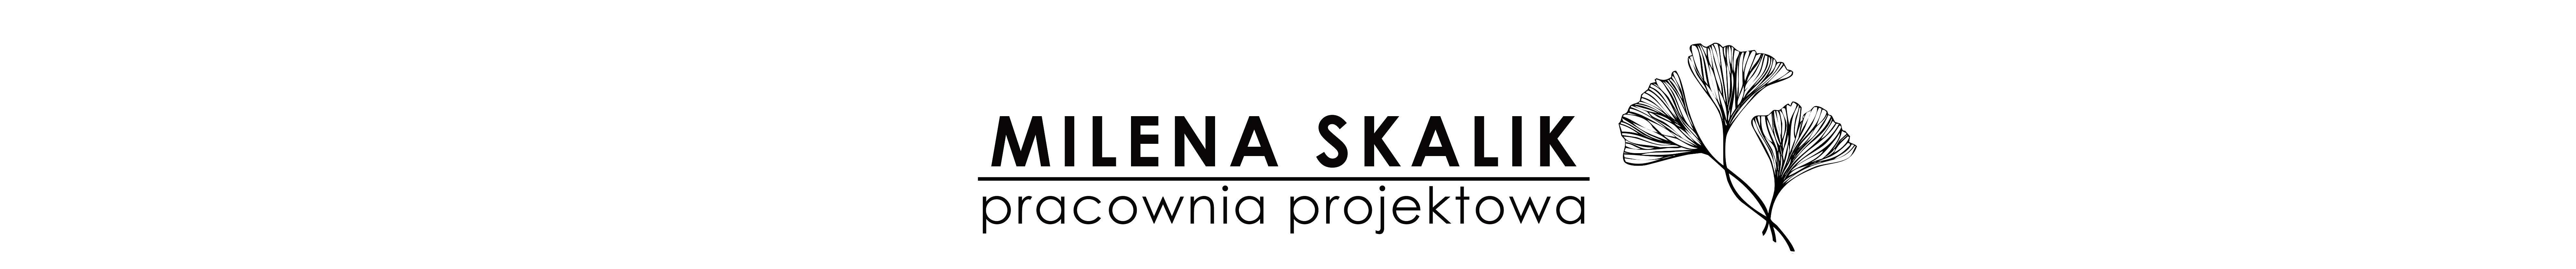 Milena Skalik's profile banner